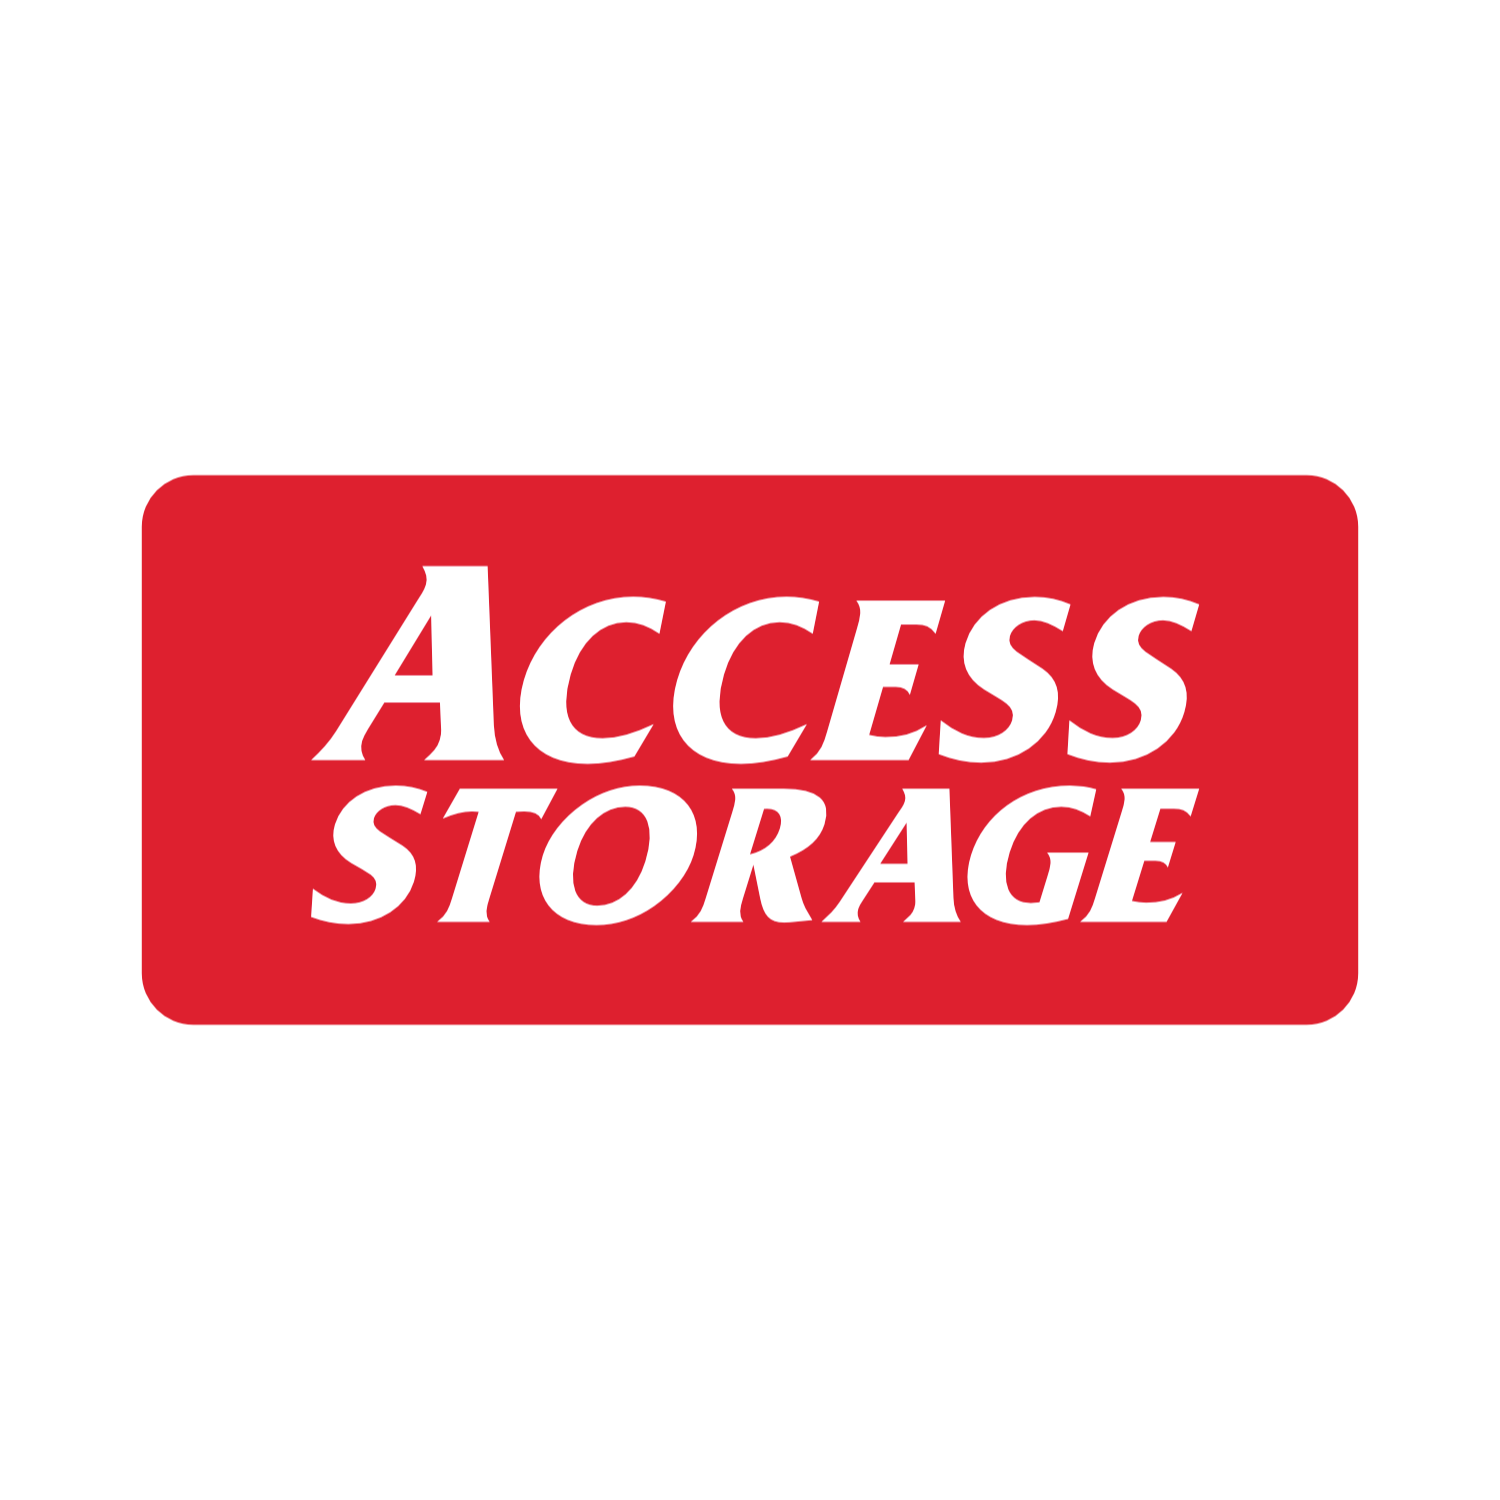 Access Storage - Moose Jaw - North (Self-Serve)